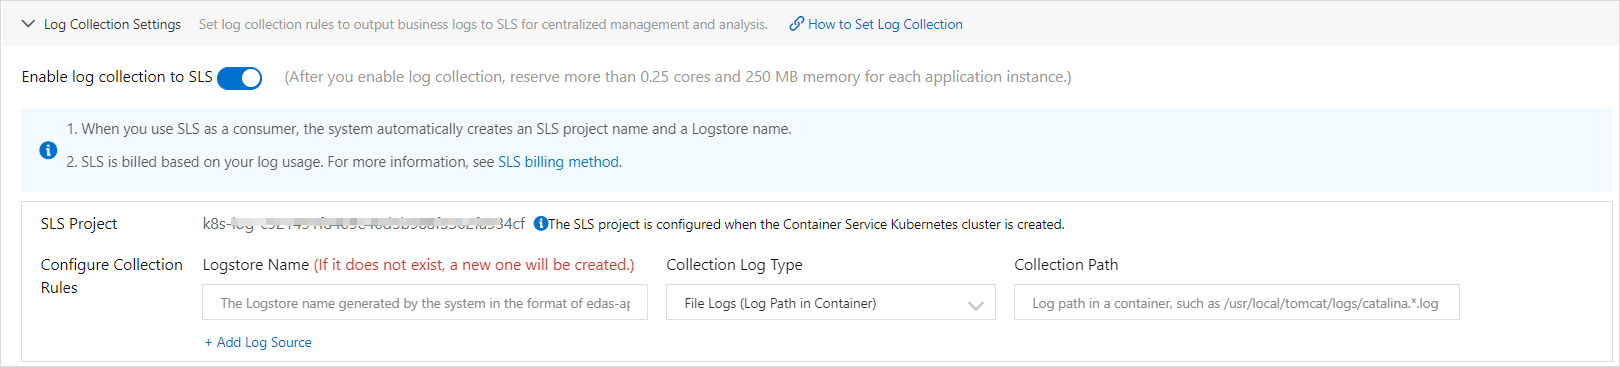 Configure log collection